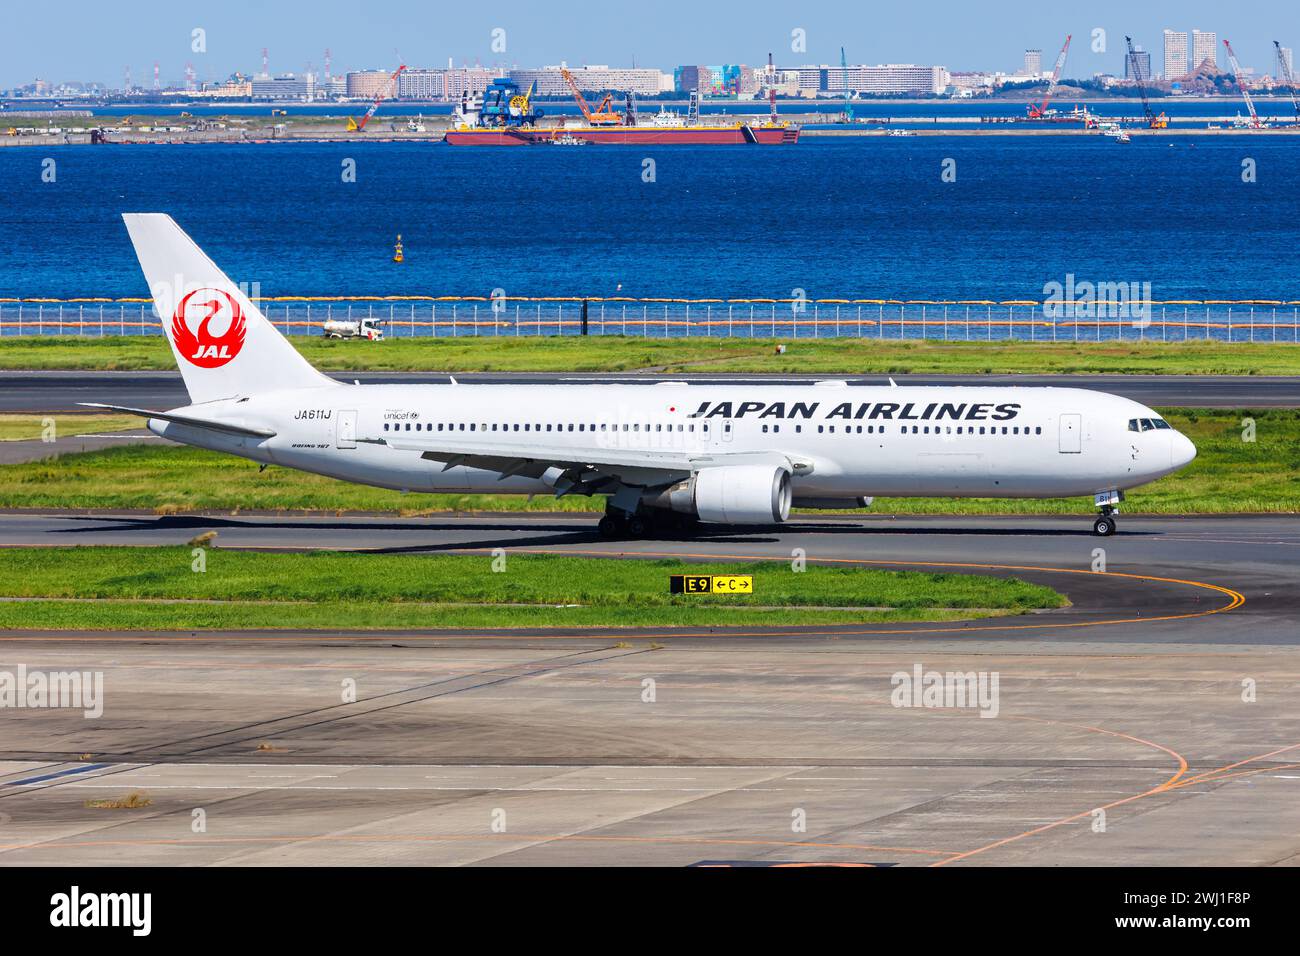 Japan Airlines JAL Boeing 767-300ER airplane Tokyo Haneda Airport in Japan Stock Photo